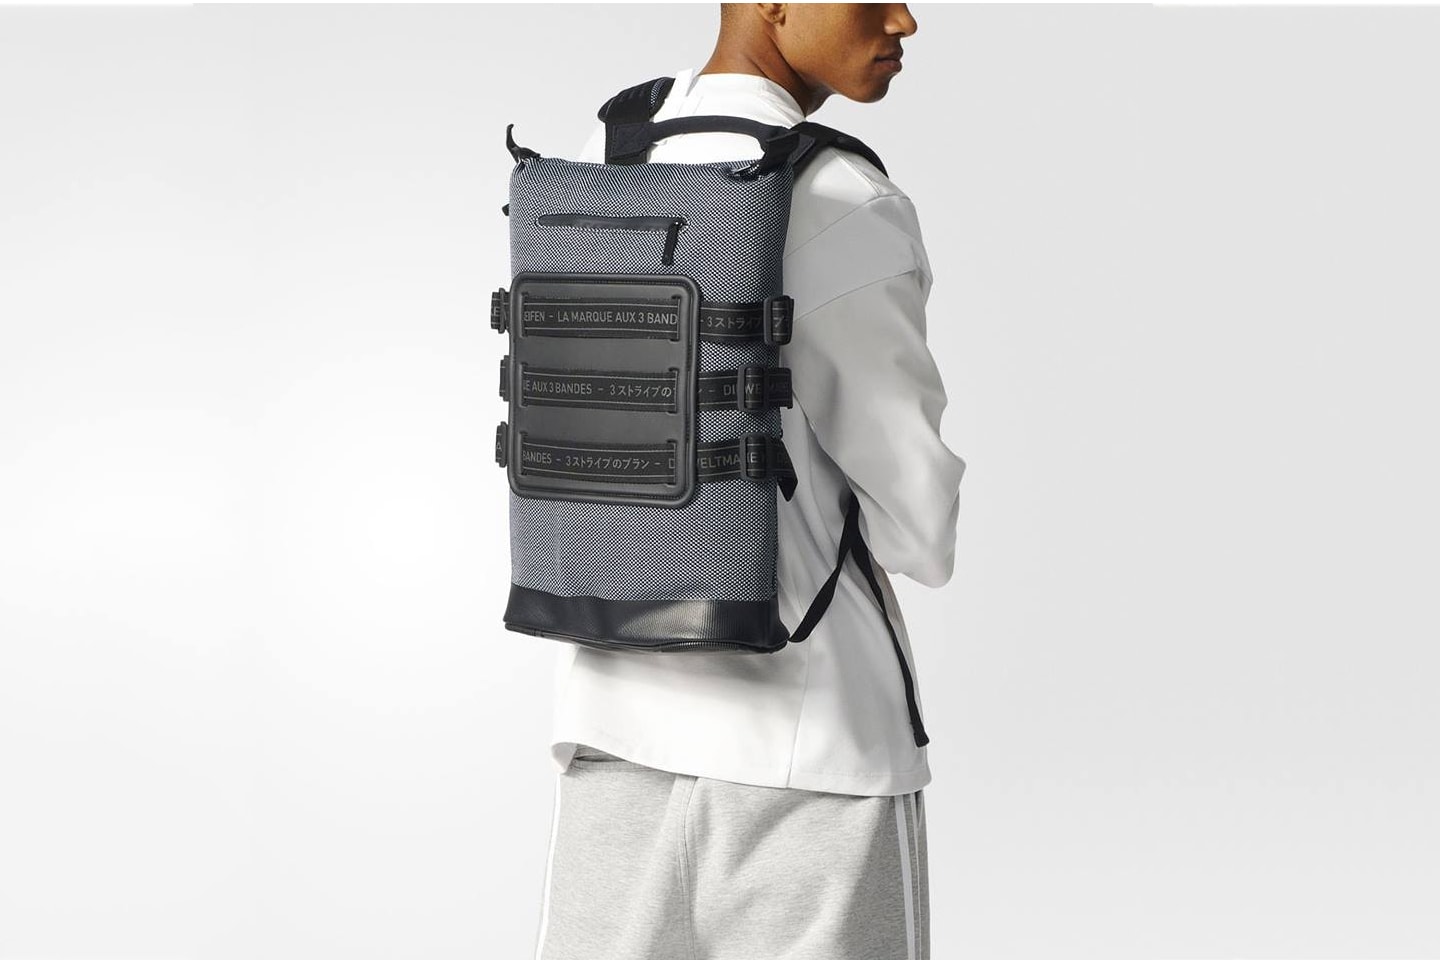 adidas Originals NMD Backpack Primeknit Footwear Three Stripes Germany Accessories Bags